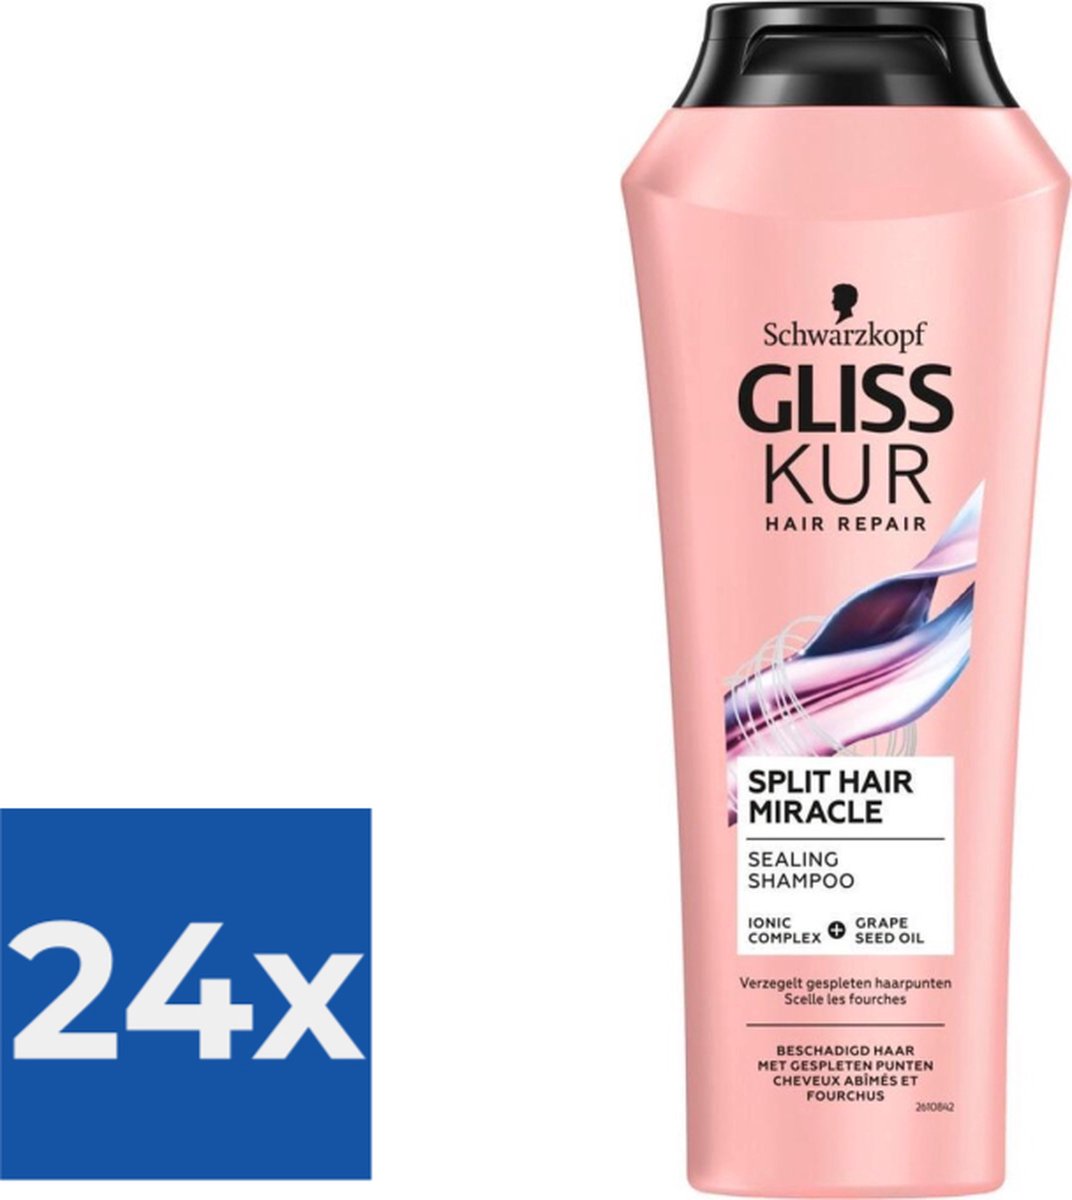 Gliss Kur Split End Shampoo 250 ml - Voordeelverpakking 24 stuks